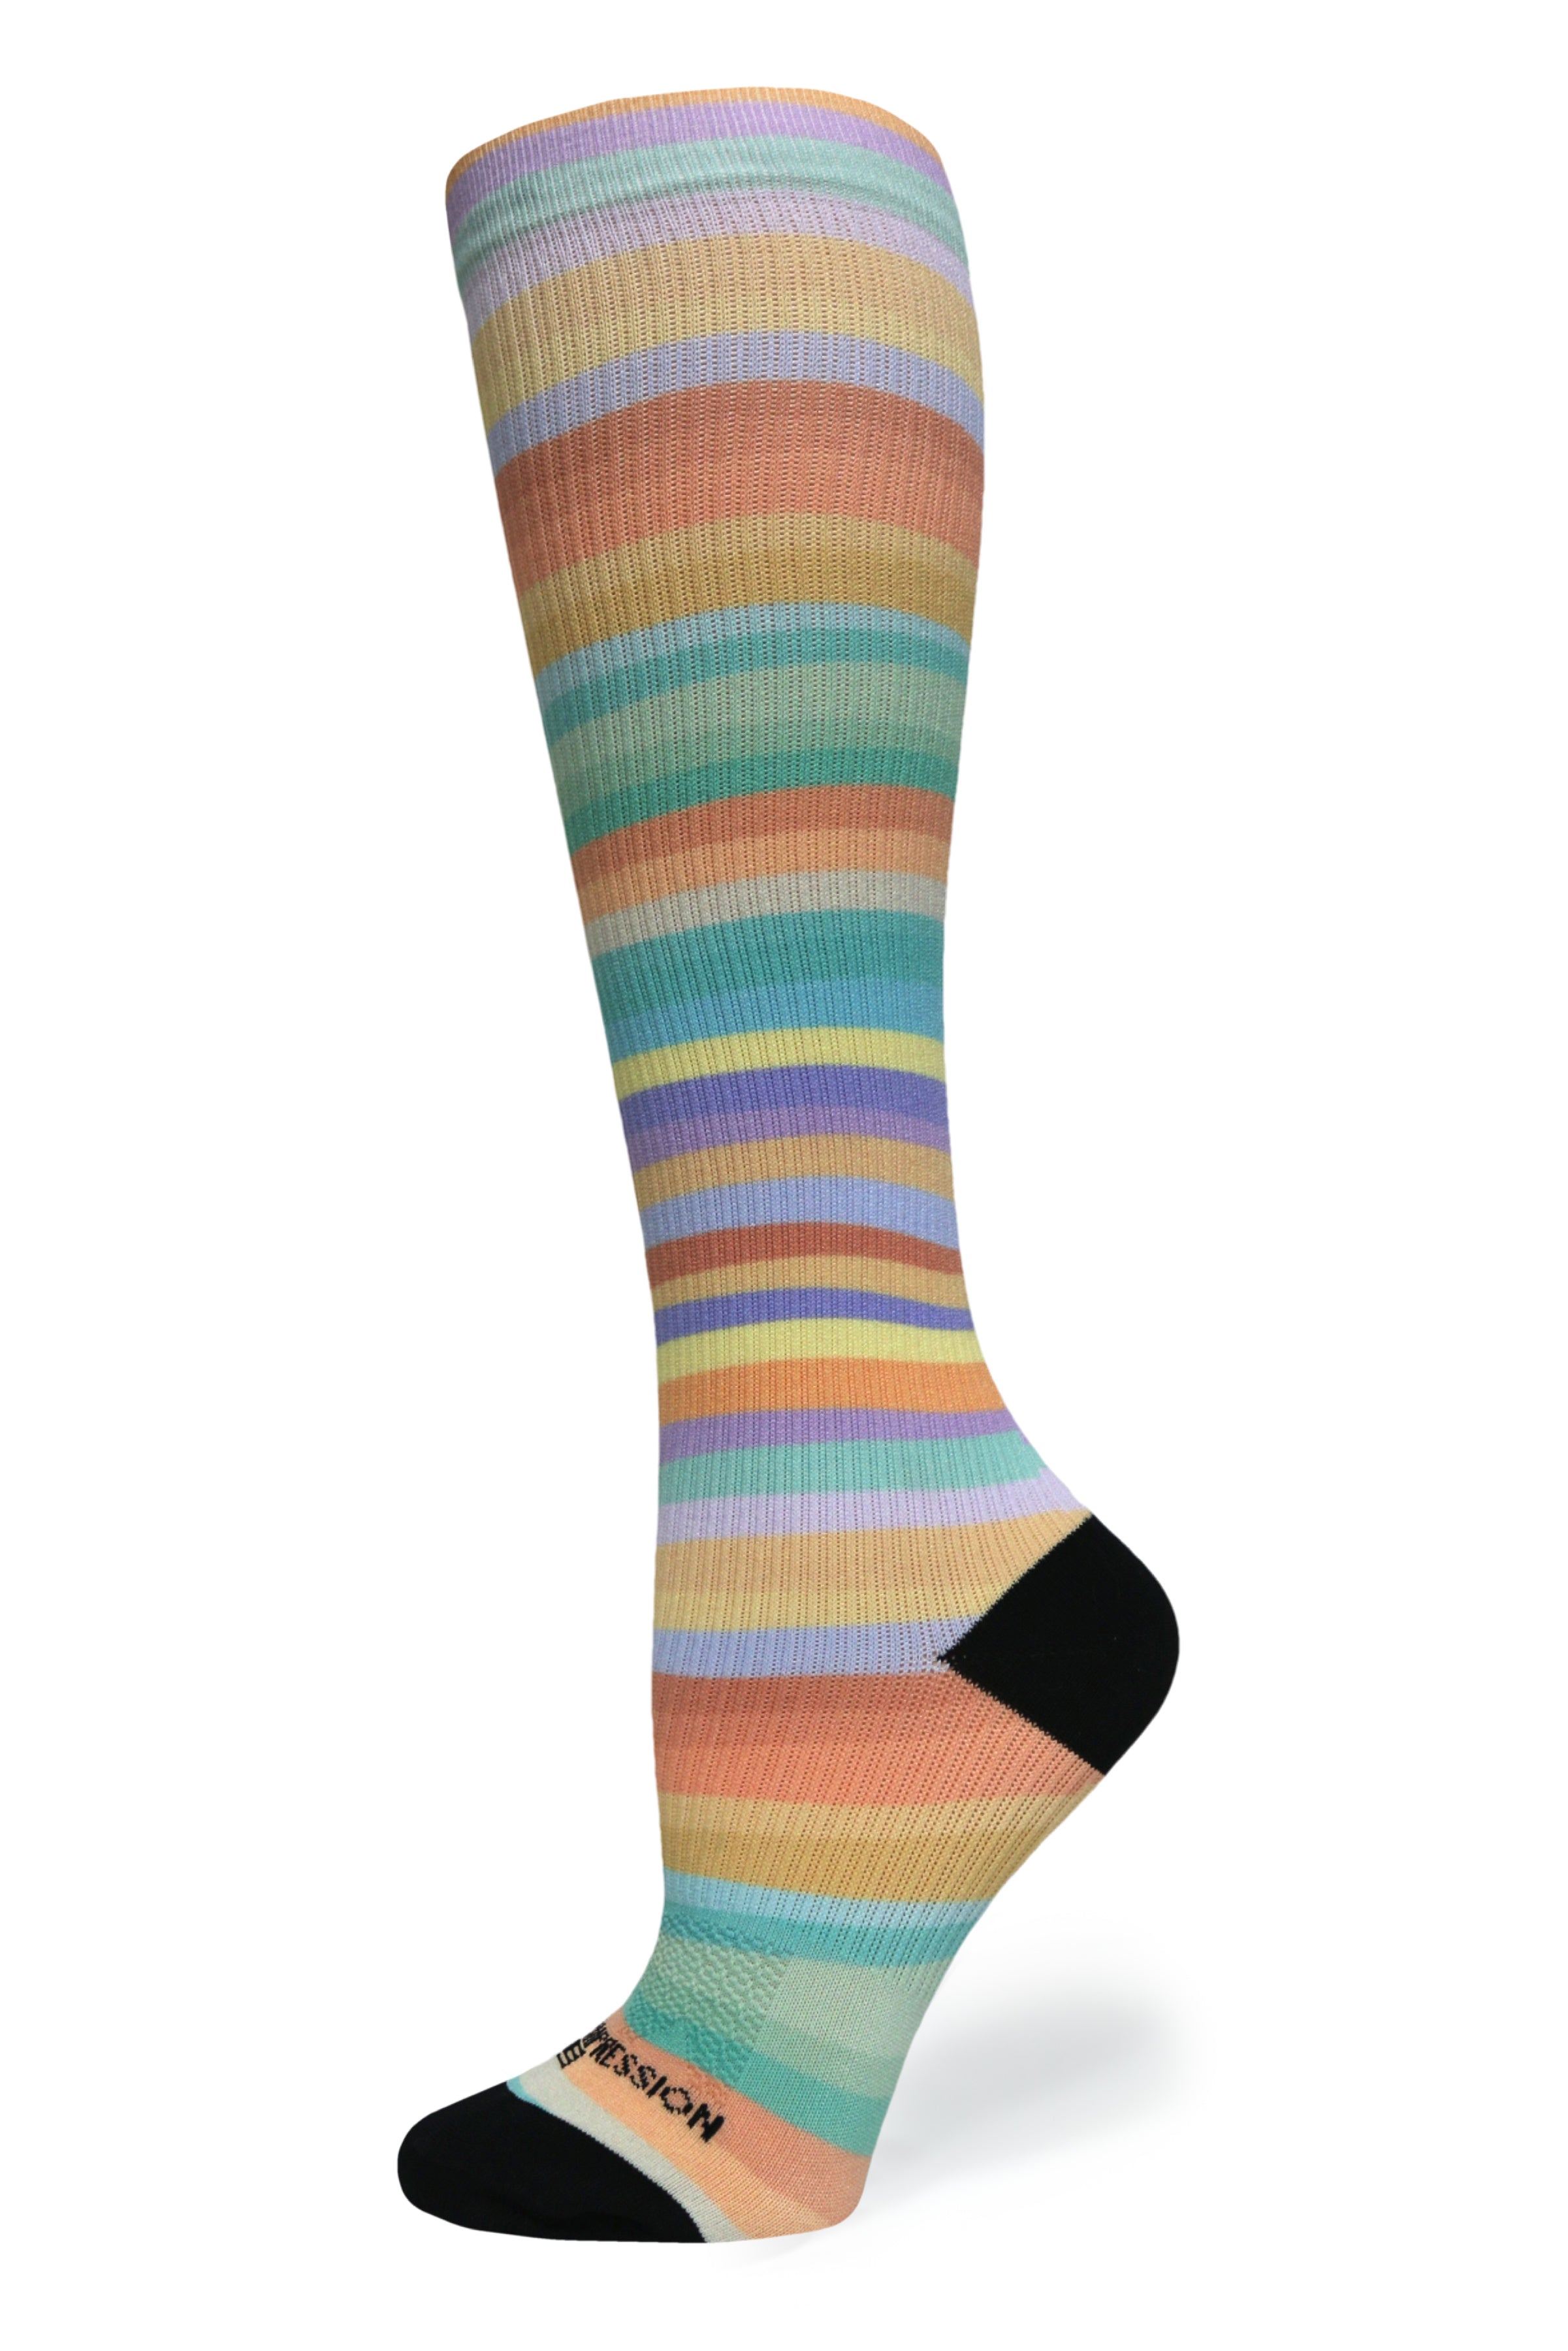 360 Spring Stripes OTC Compression Socks (Standard & Extra Wide)